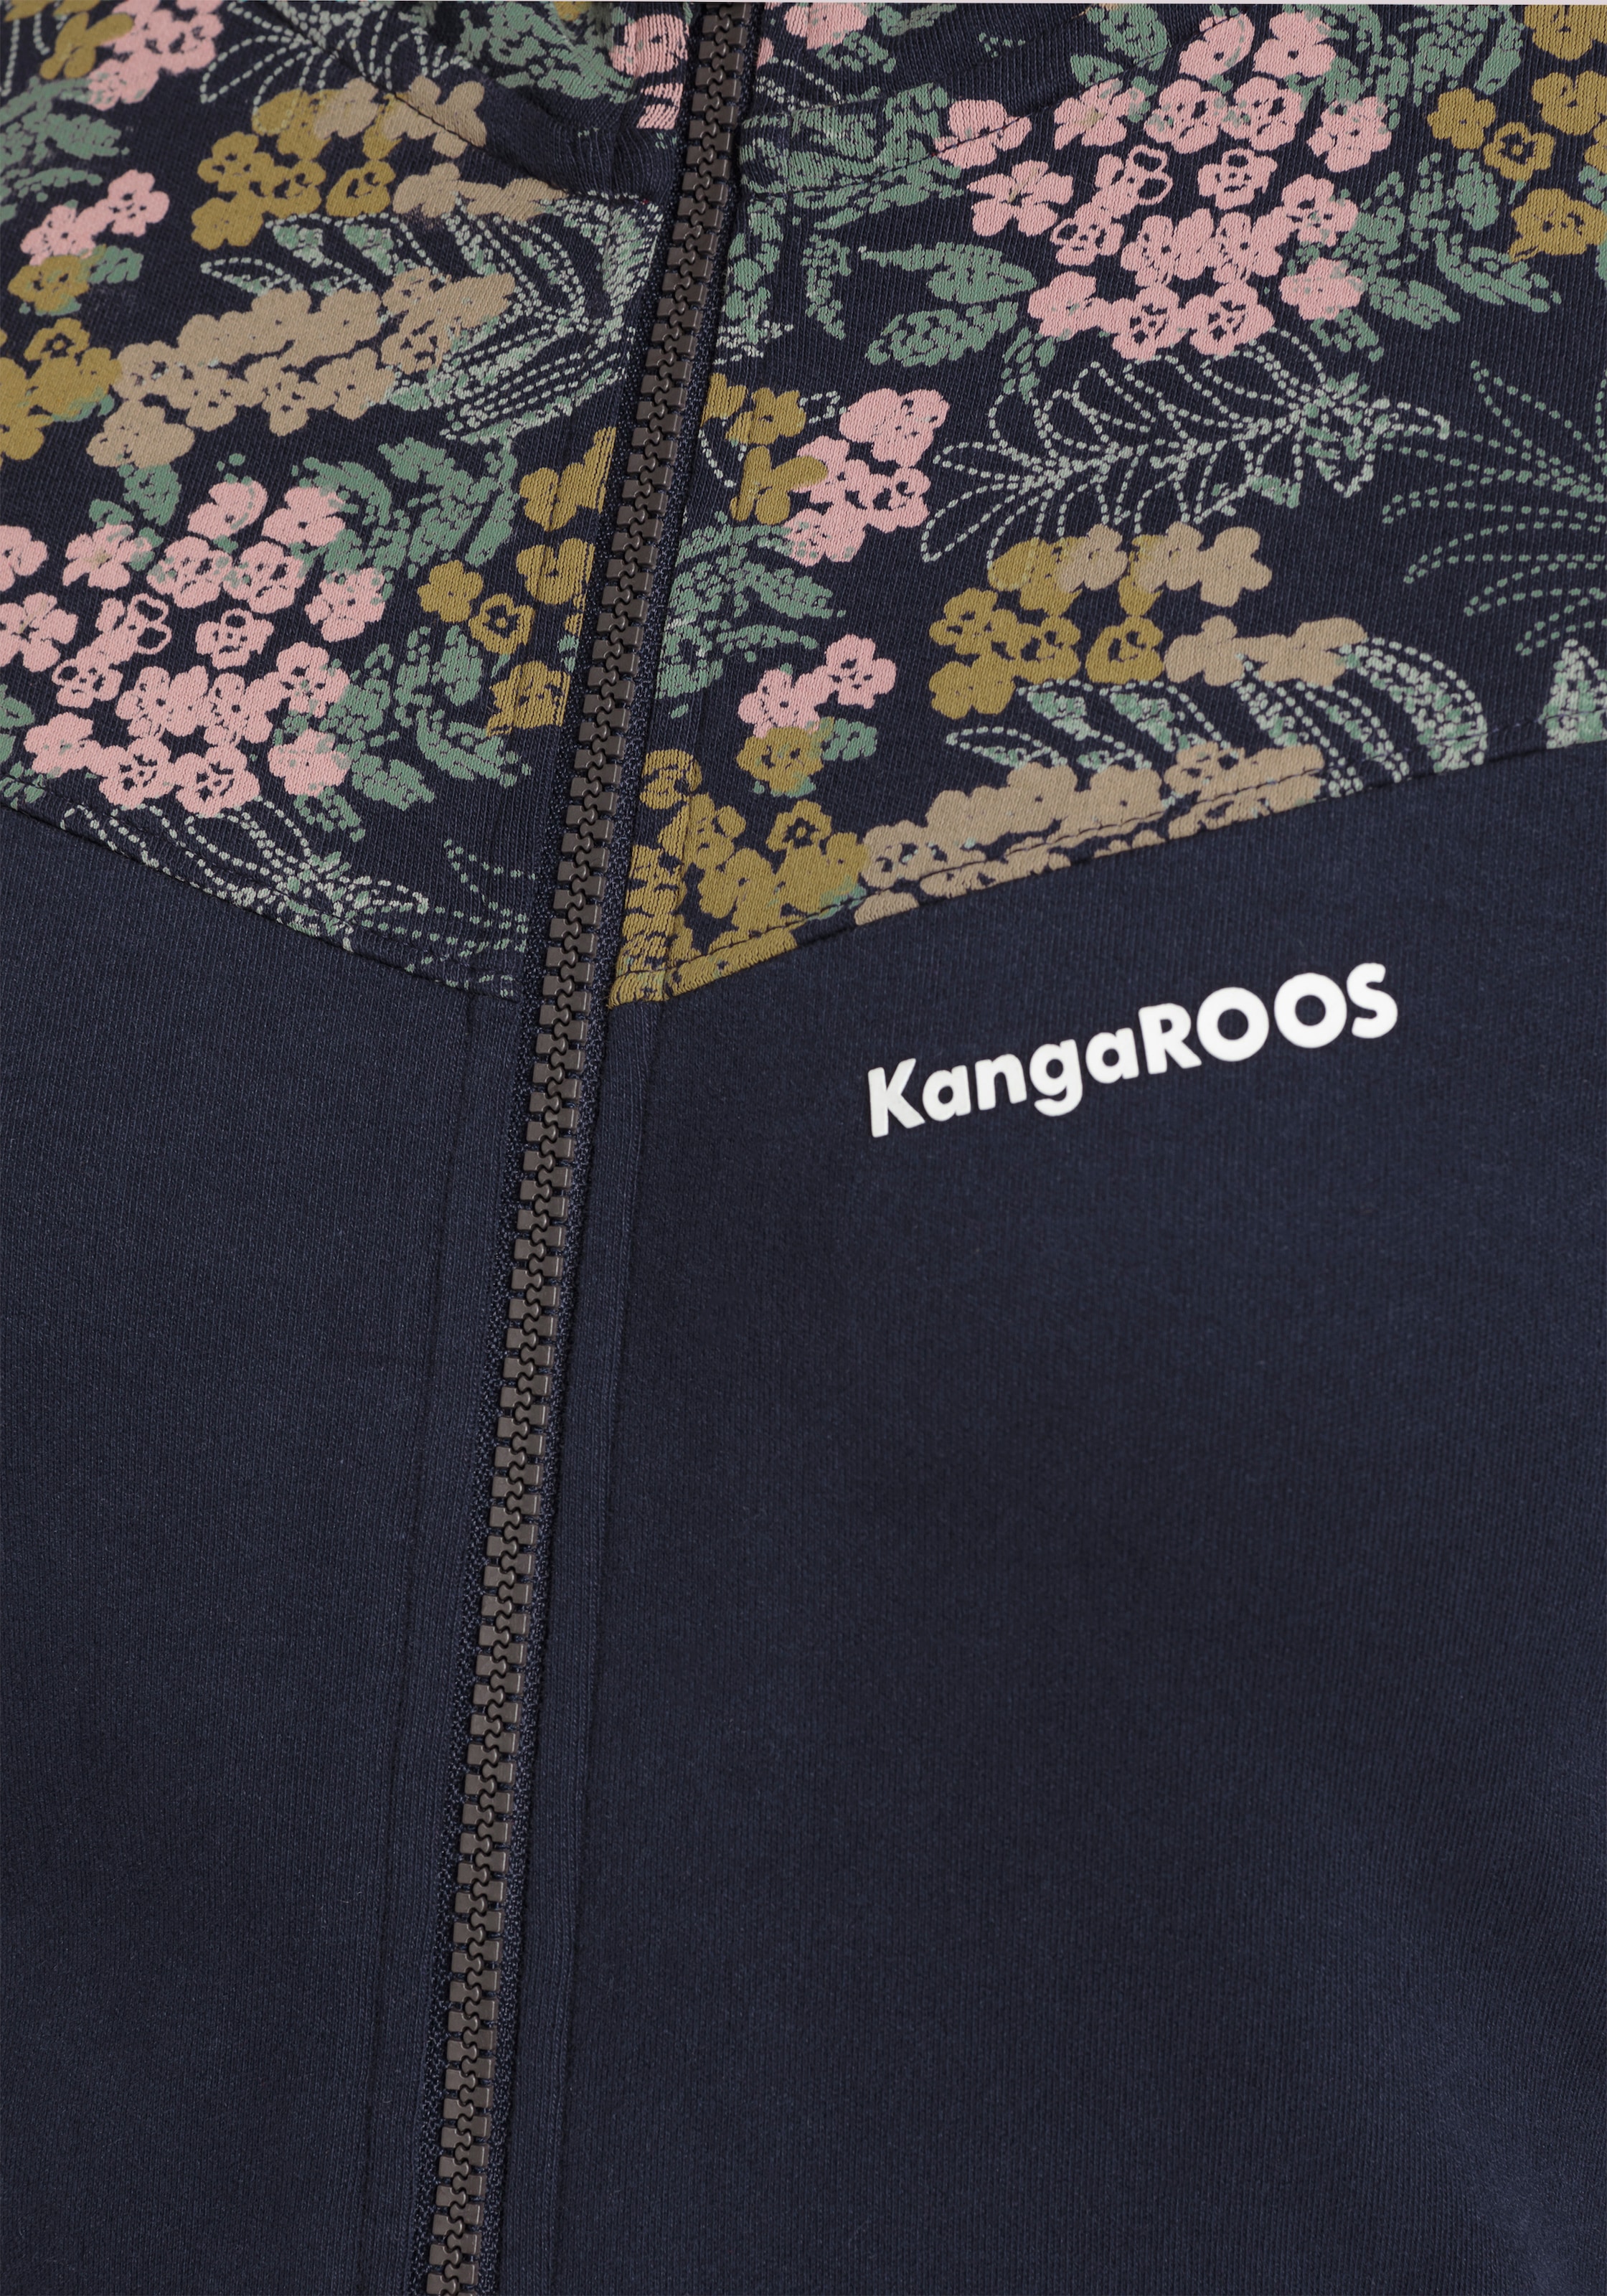 kaufen BAUR mit | KangaROOS Kapuzensweatjacke, Blumen Alloverdruck-NEUE-KOLLEKTION